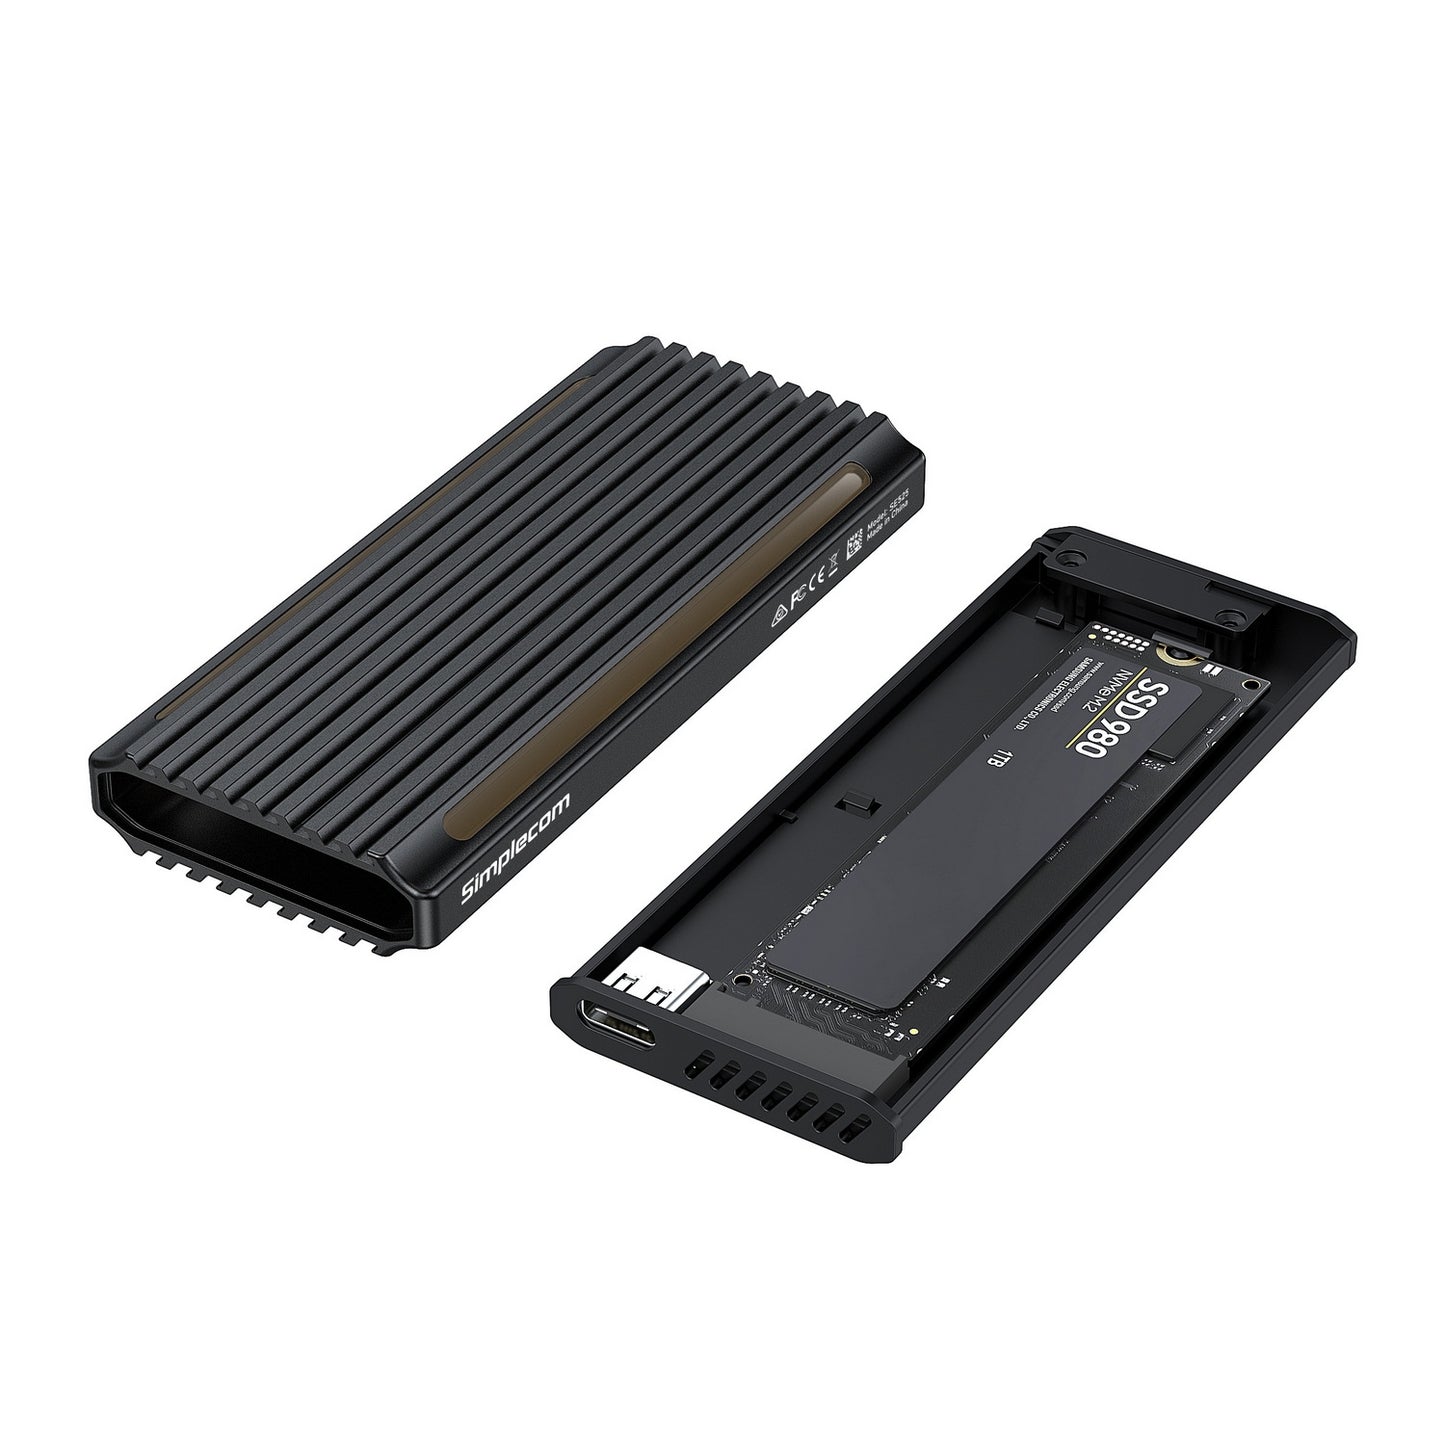 Simplecom SE525 NVMe / SATA M.2 SSD USB-C Enclosure with RGB Light USB 3.2 Gen 2 10Gbps